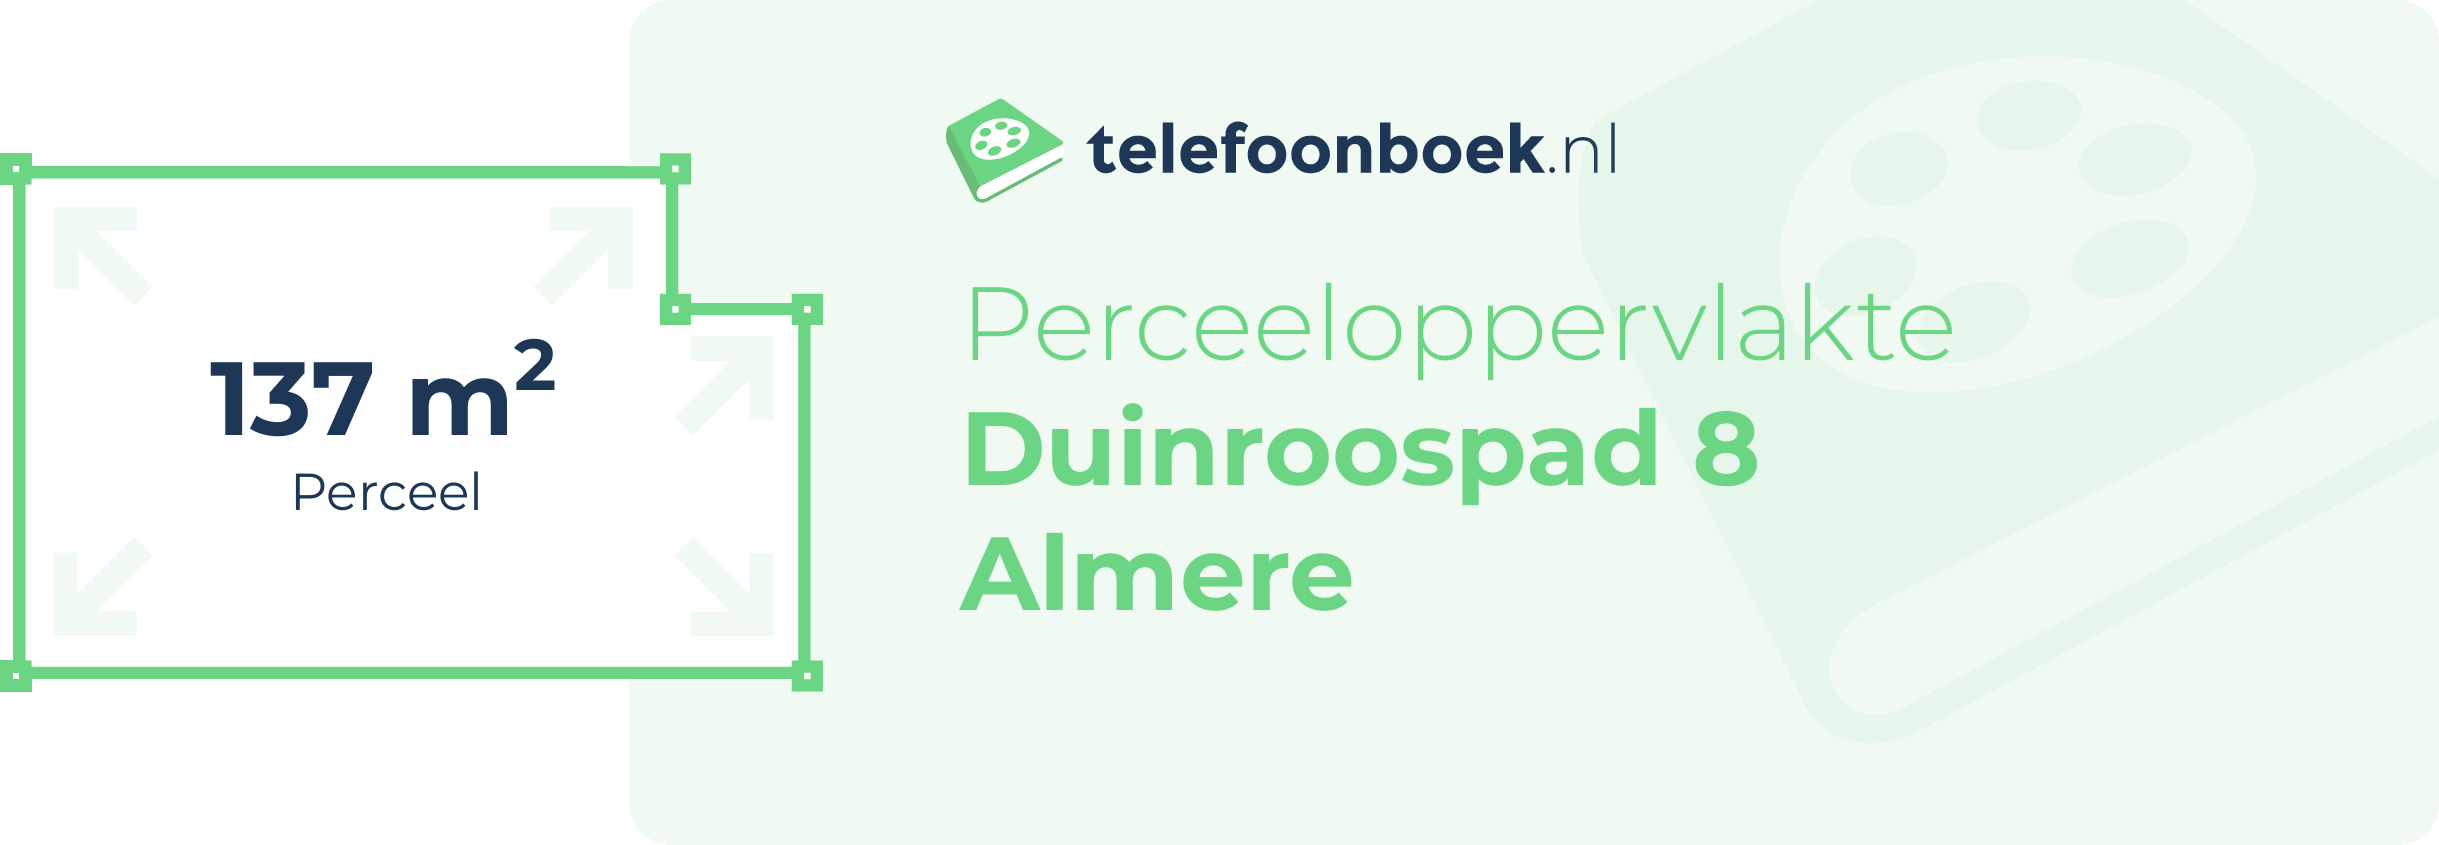 Perceeloppervlakte Duinroospad 8 Almere